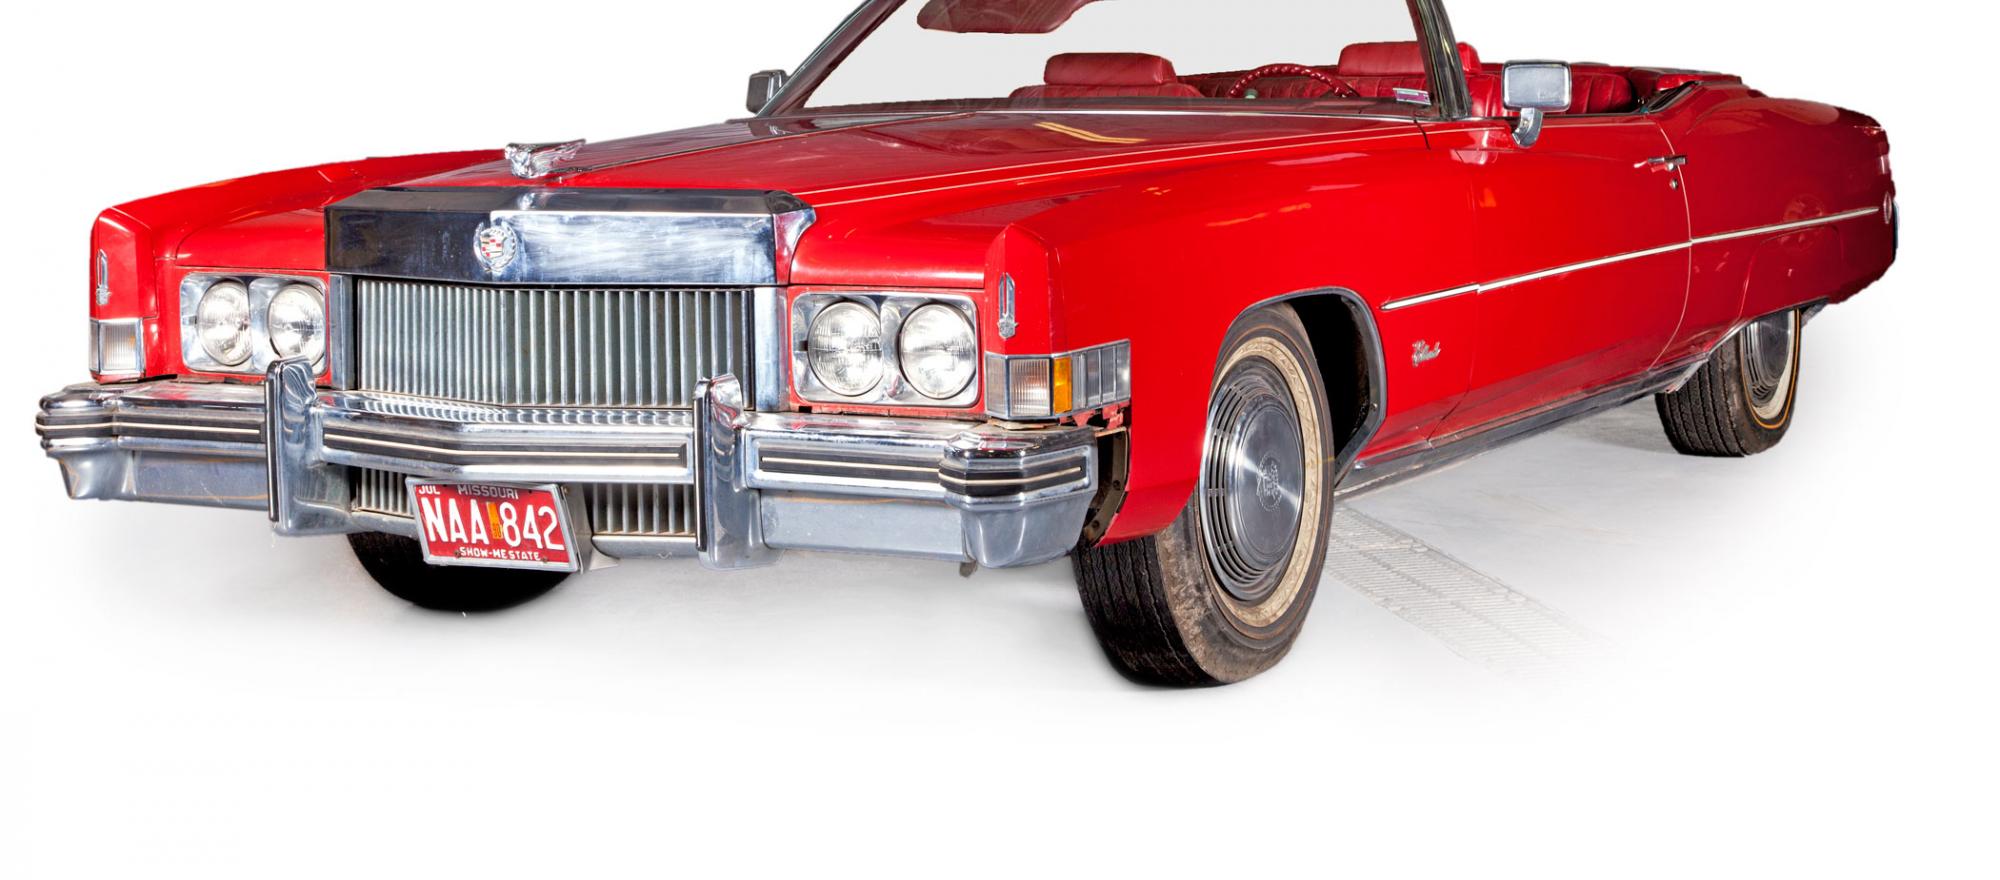 Chuck Berry's Cadillac